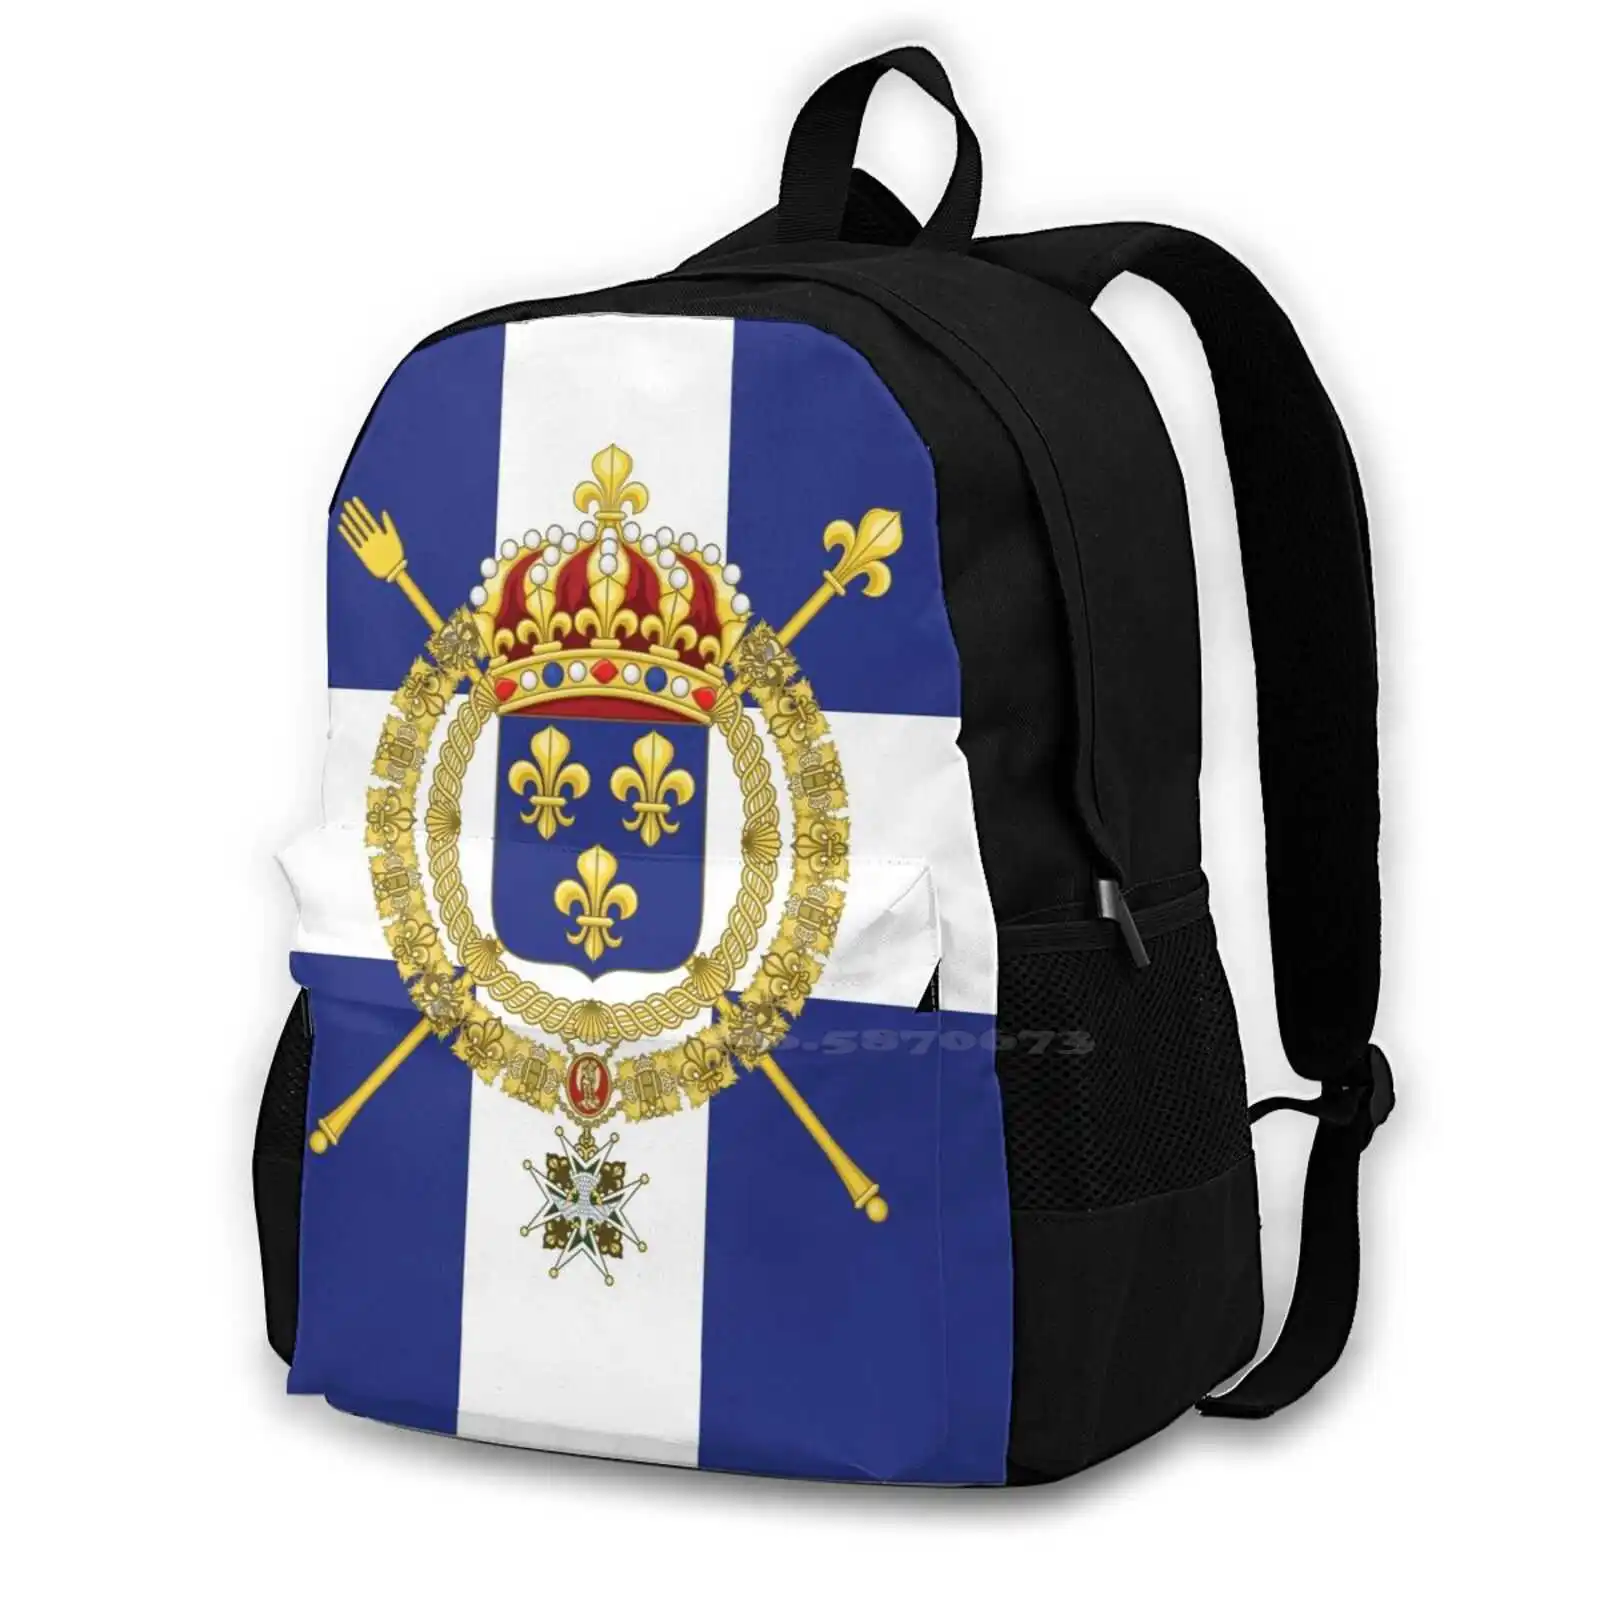 

Naval Flag Of The Kingdom Of France Civil Ensign Quebec Nouvelle-France Hd High Quality Women Men Teens Laptop Travel School